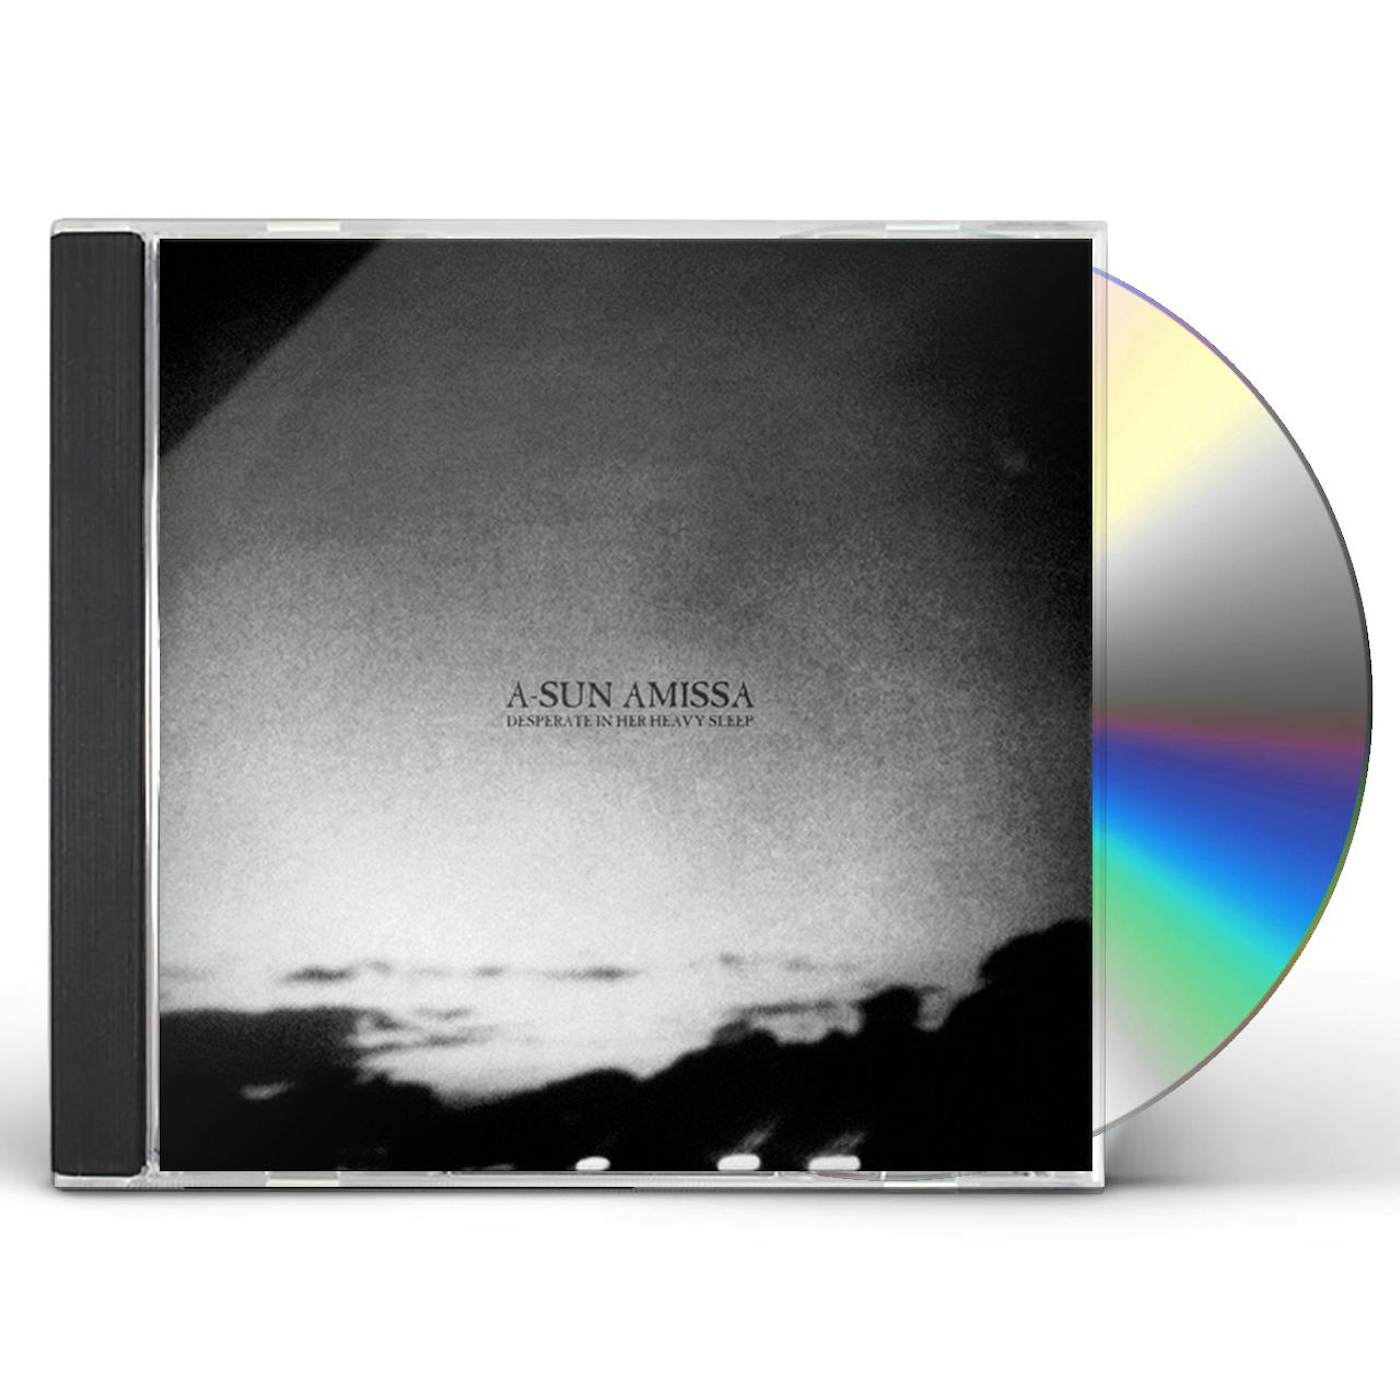 A-Sun Amissa DESPERATE IN HER HEAVY SLEEP CD